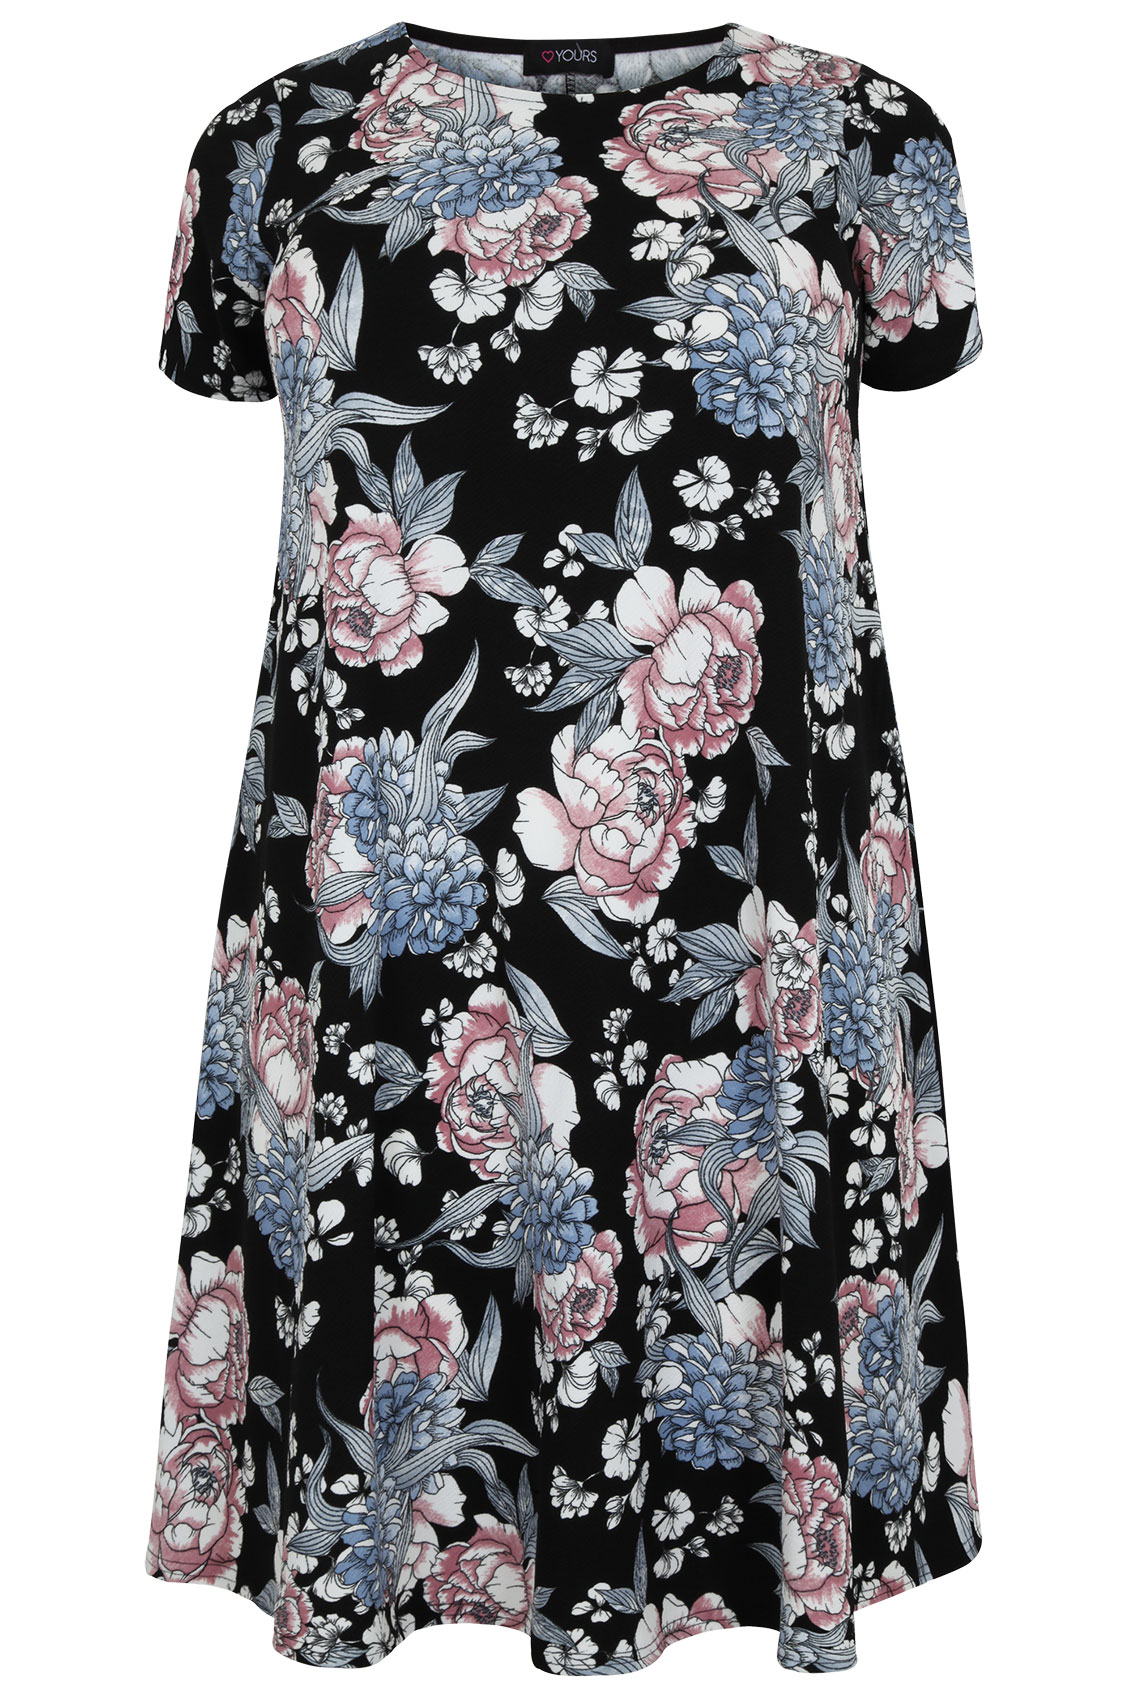 Black, Blue & Pink Floral Print Swing Dress plus Size 16 to 32